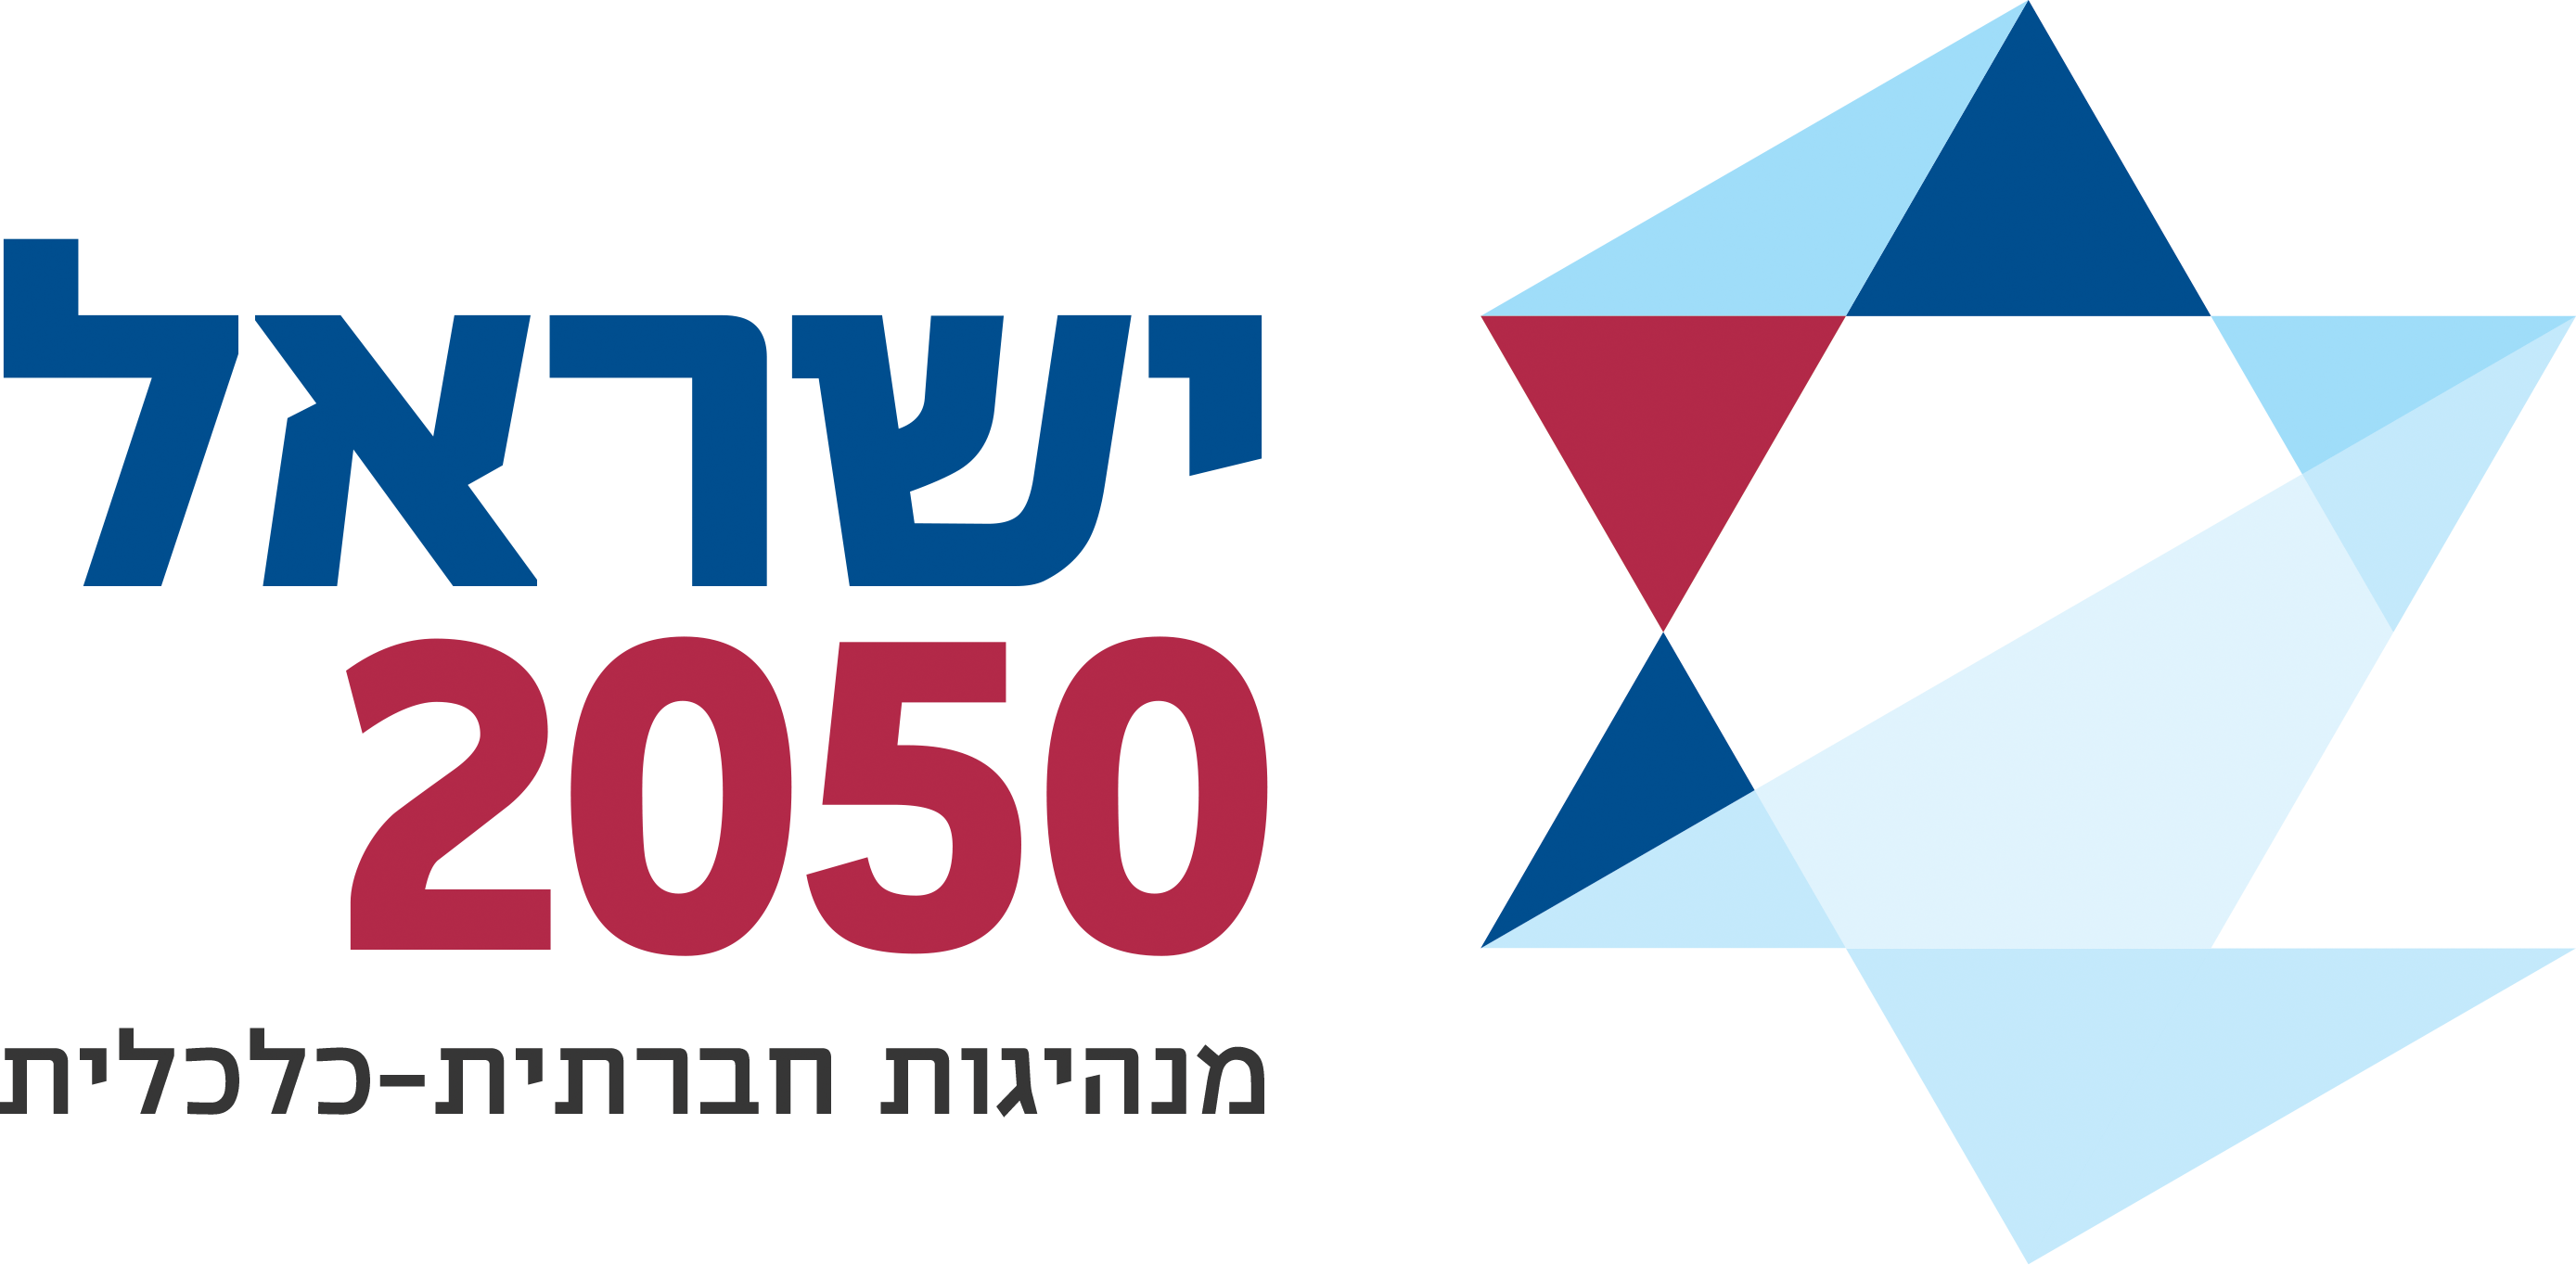 Israel 2050. Socio-economic Leadership by the Students Union 